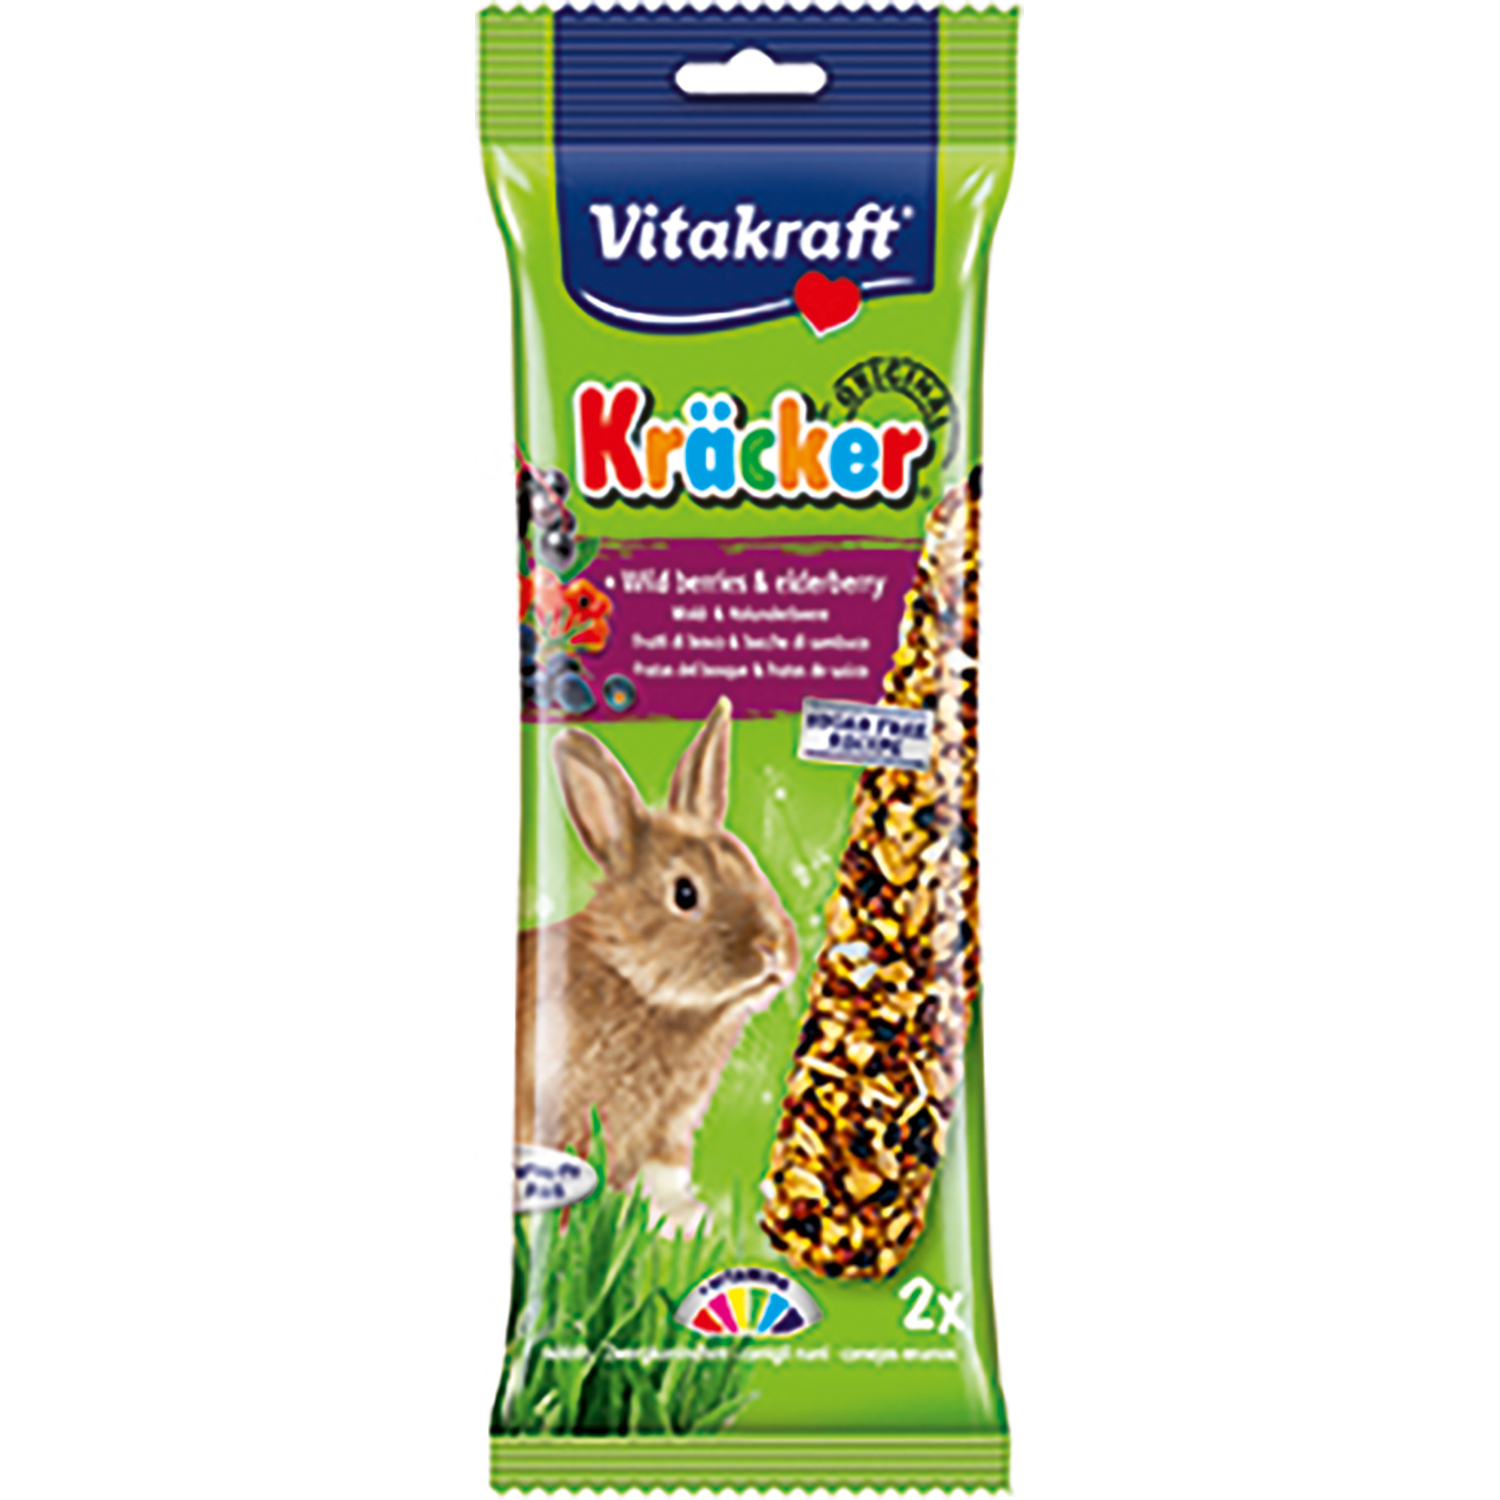 Vitakraft Kracker Rabbit Wild Berry and Elderberry Stick Treat 2 Pack Image